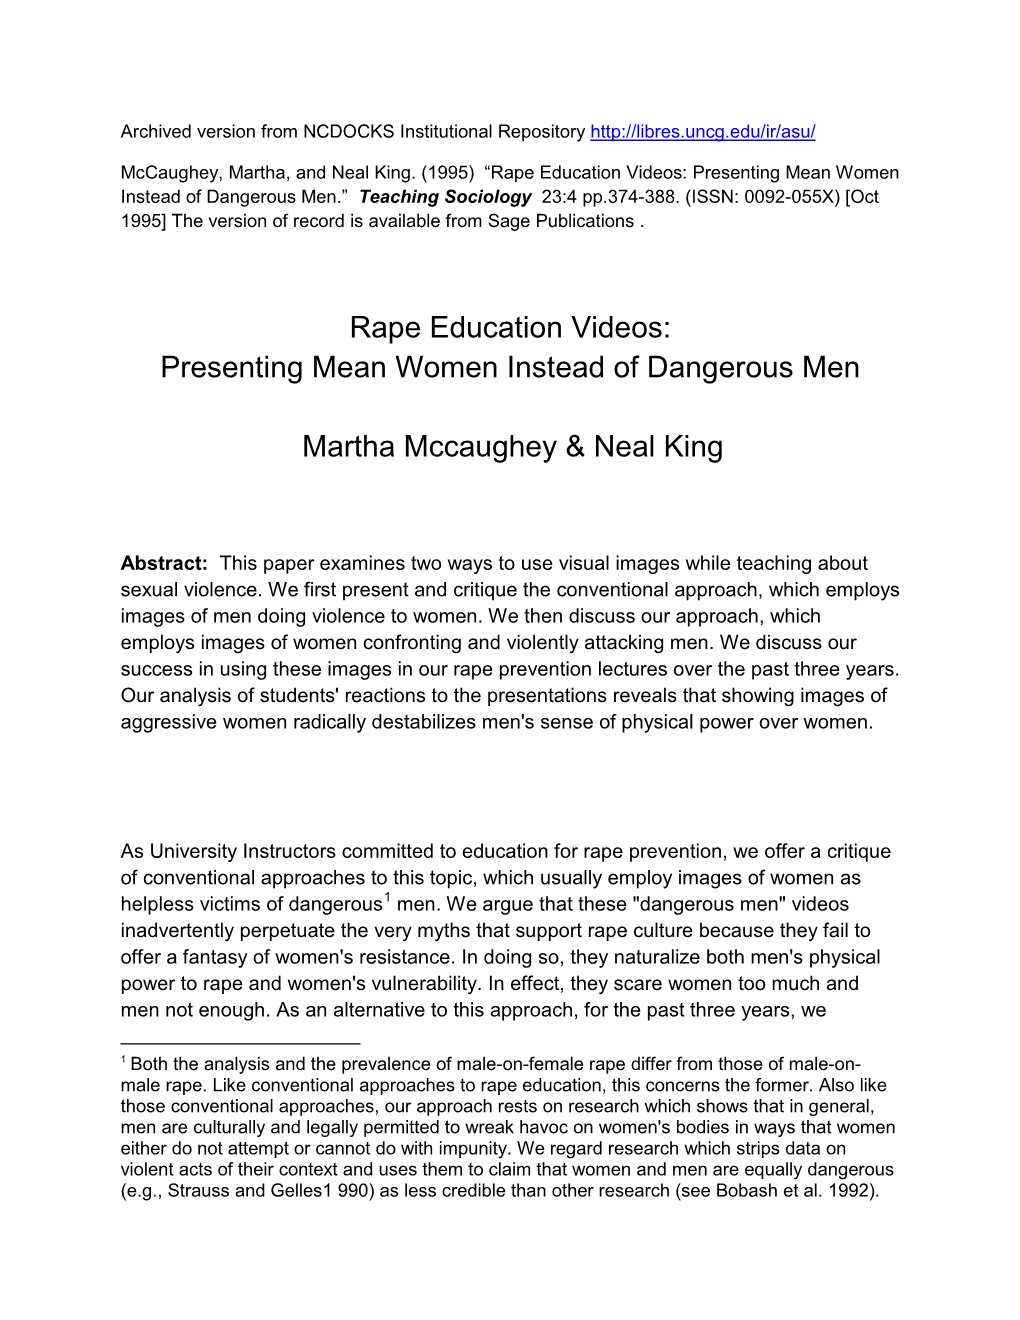 Rape Education Videos: Presenting Mean Women Instead of Dangerous Men.” Teaching Sociology 23:4 Pp.374-388